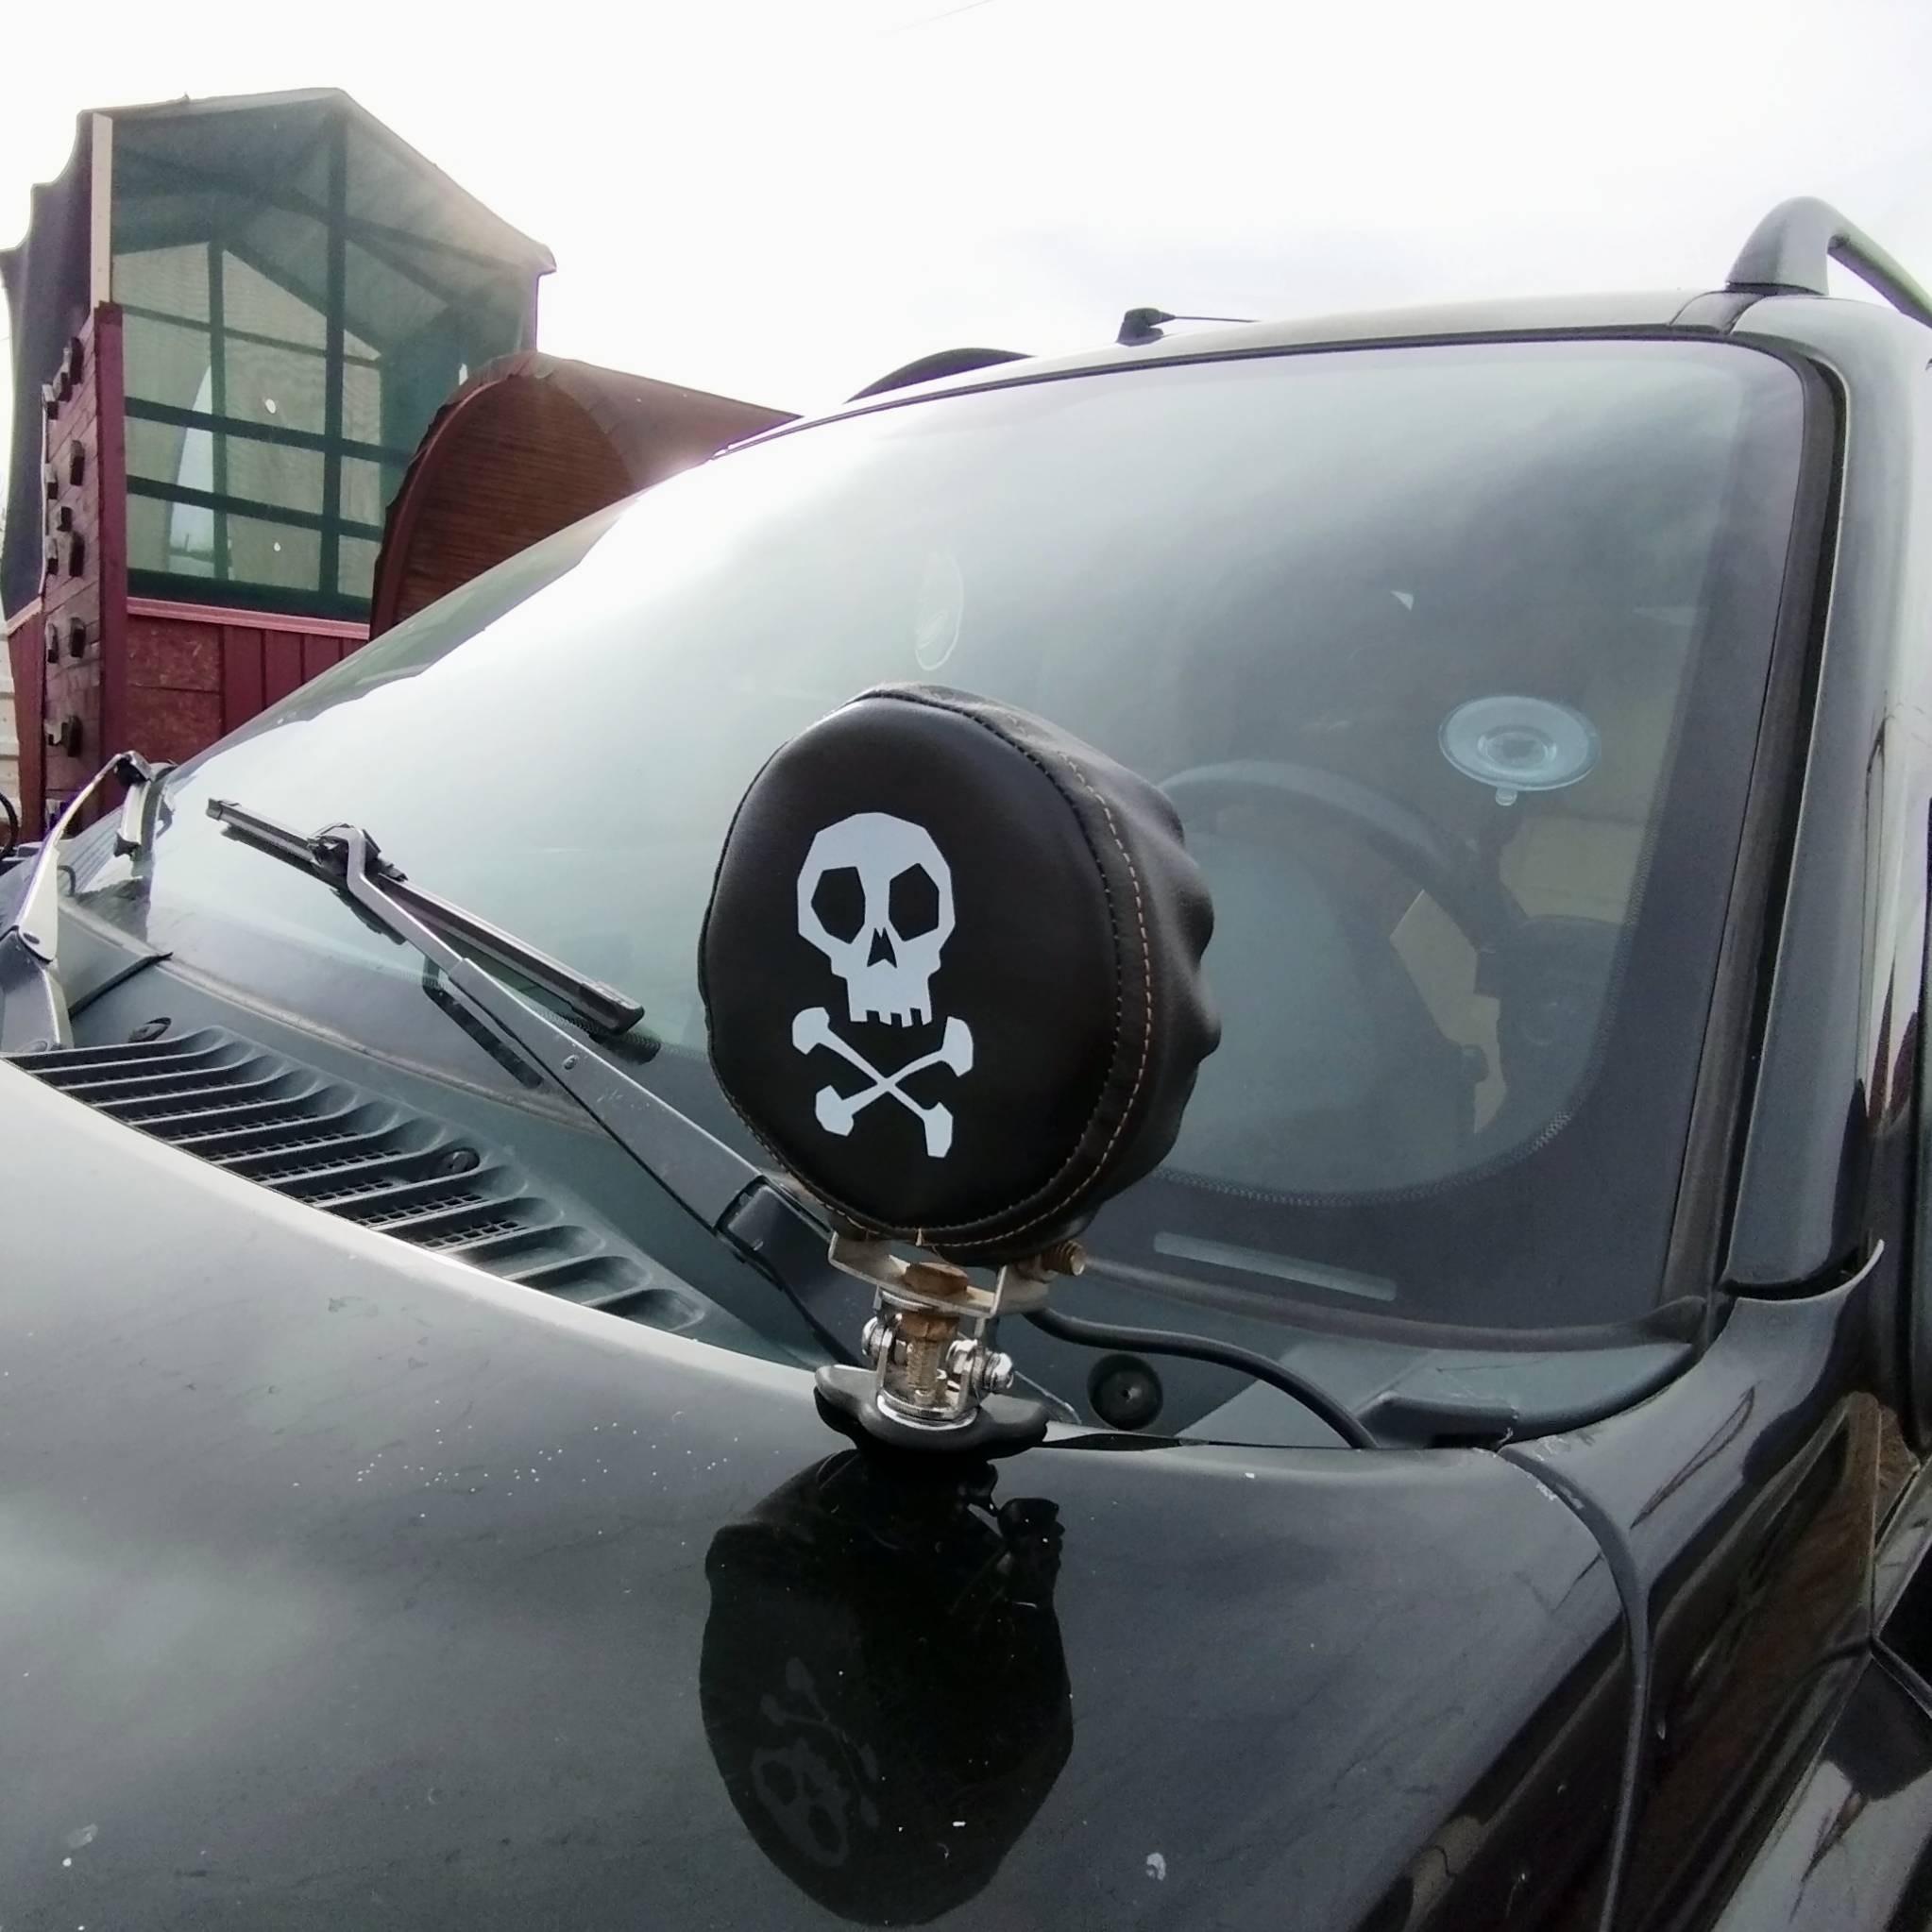 Off Road Lighting Cover - Pirate Skull Designed